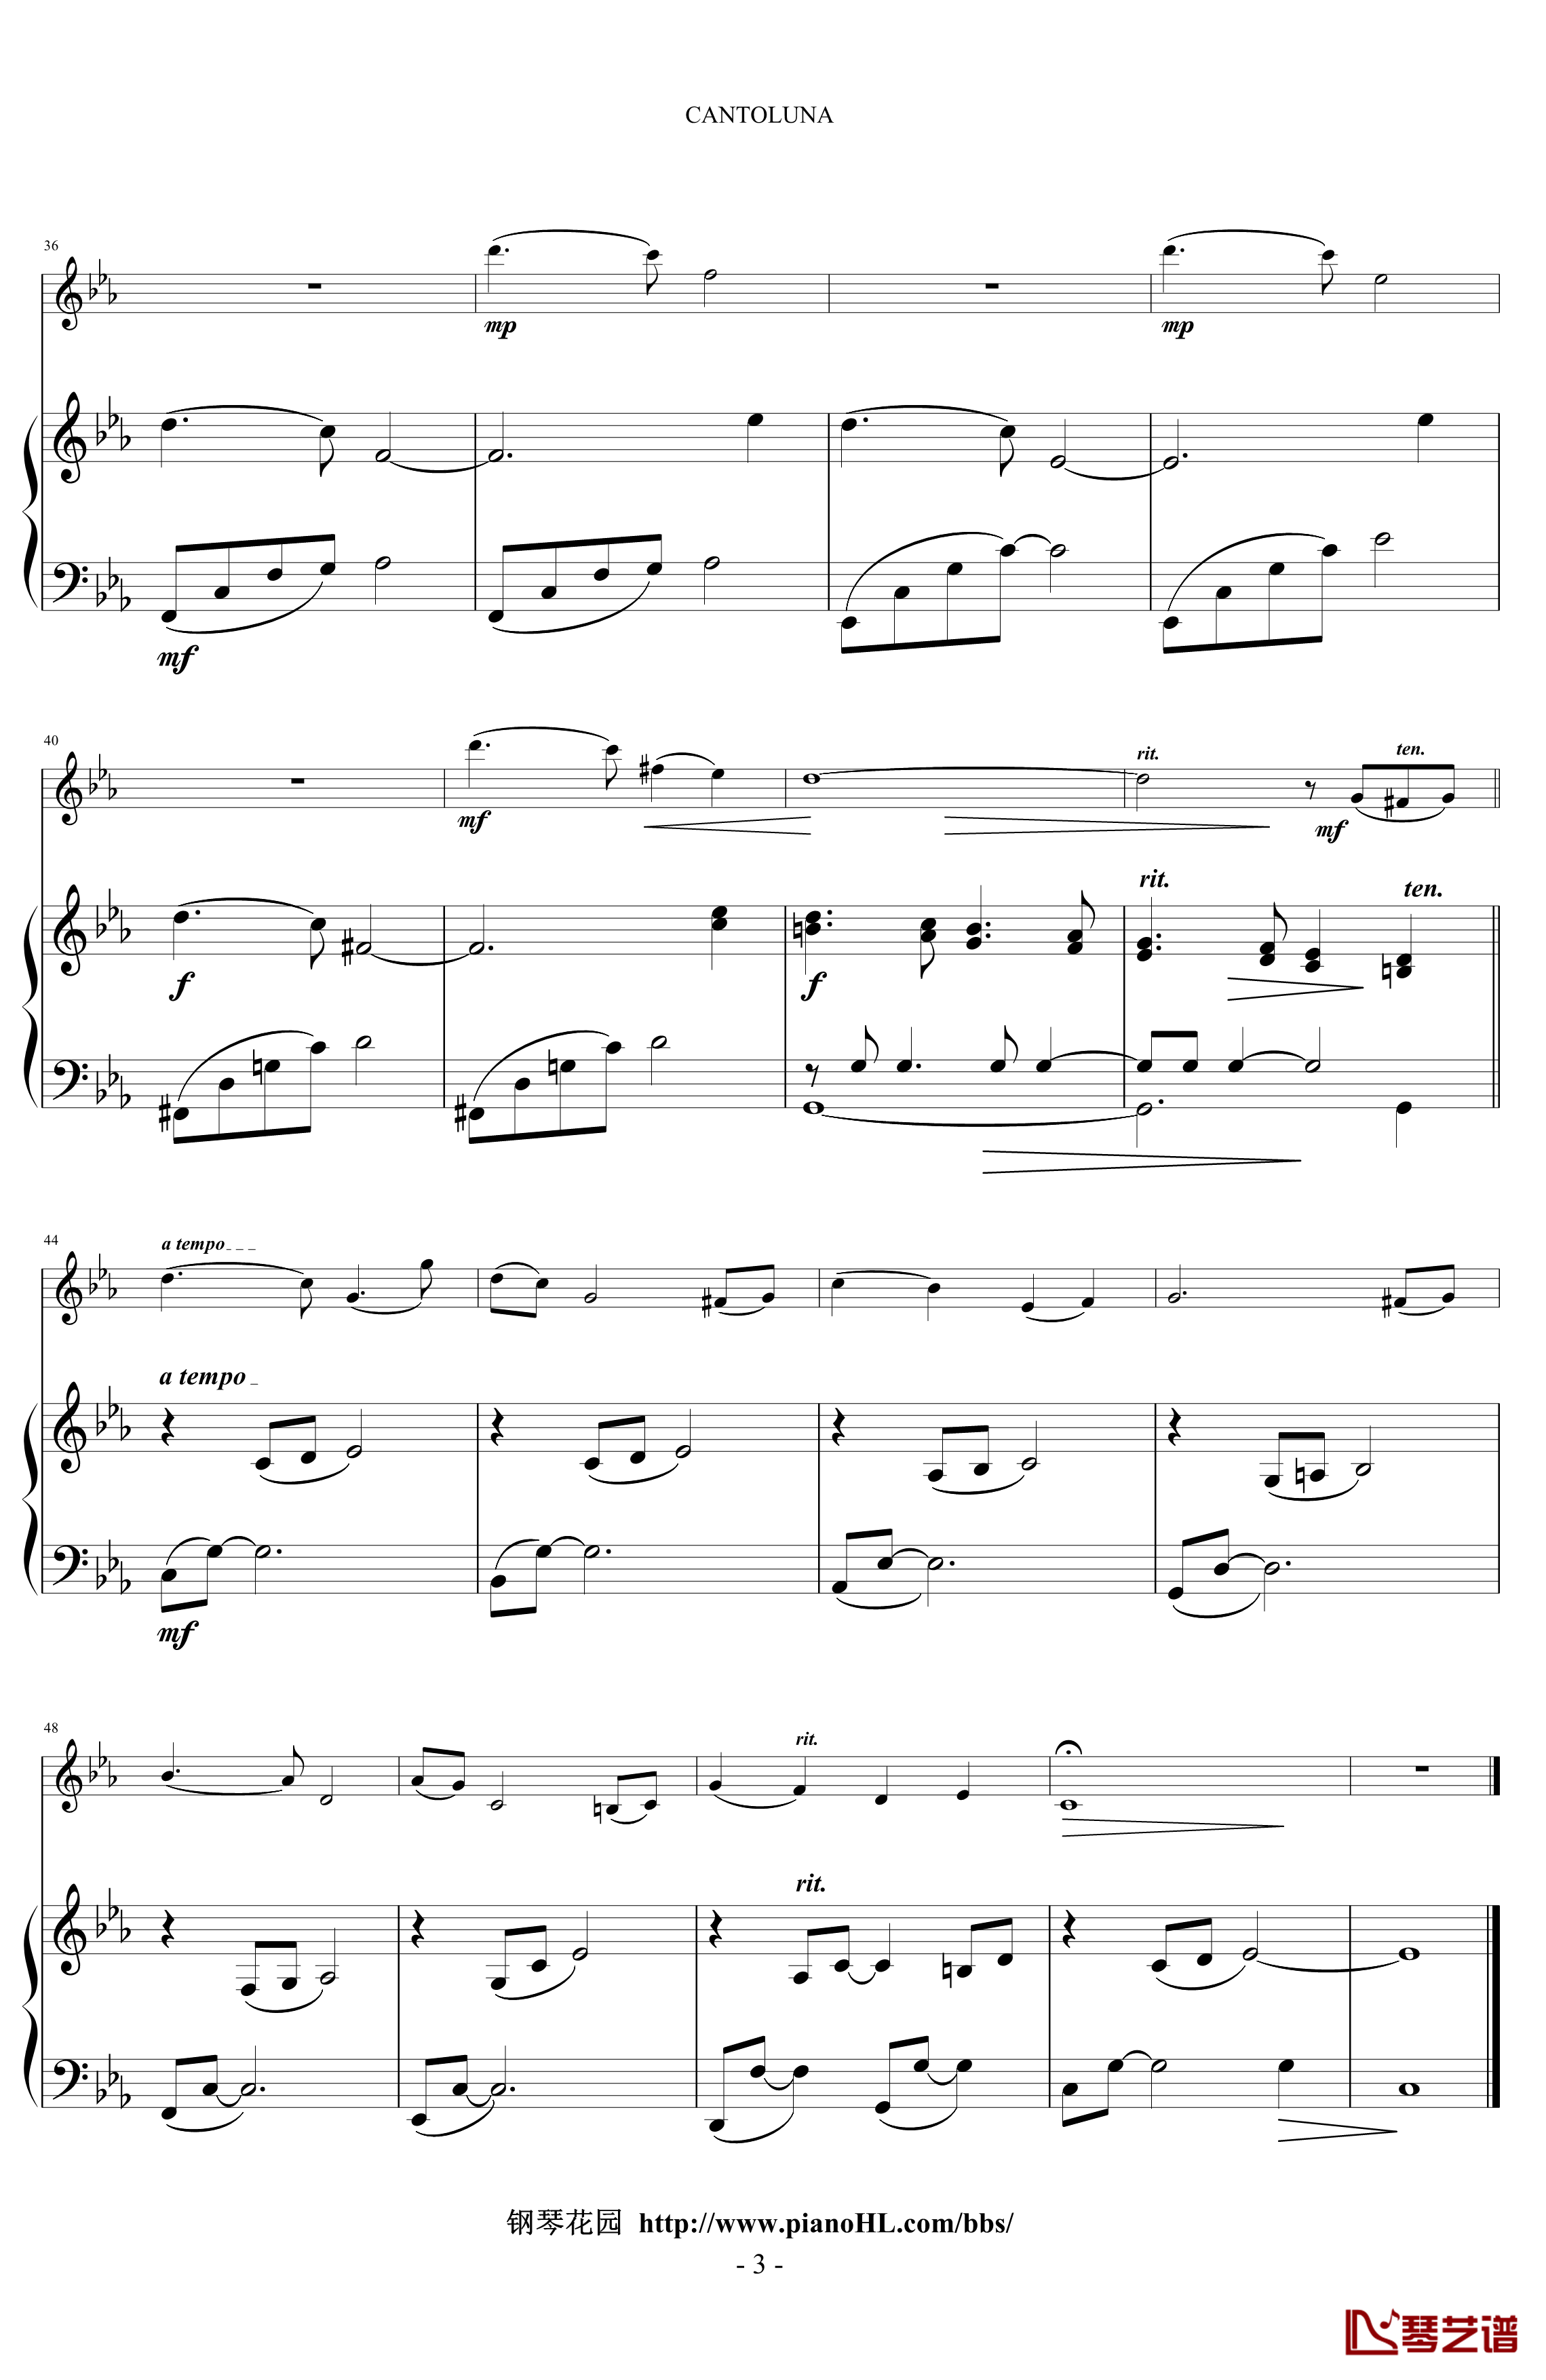 Cantoluna钢琴谱-神秘园乐队3